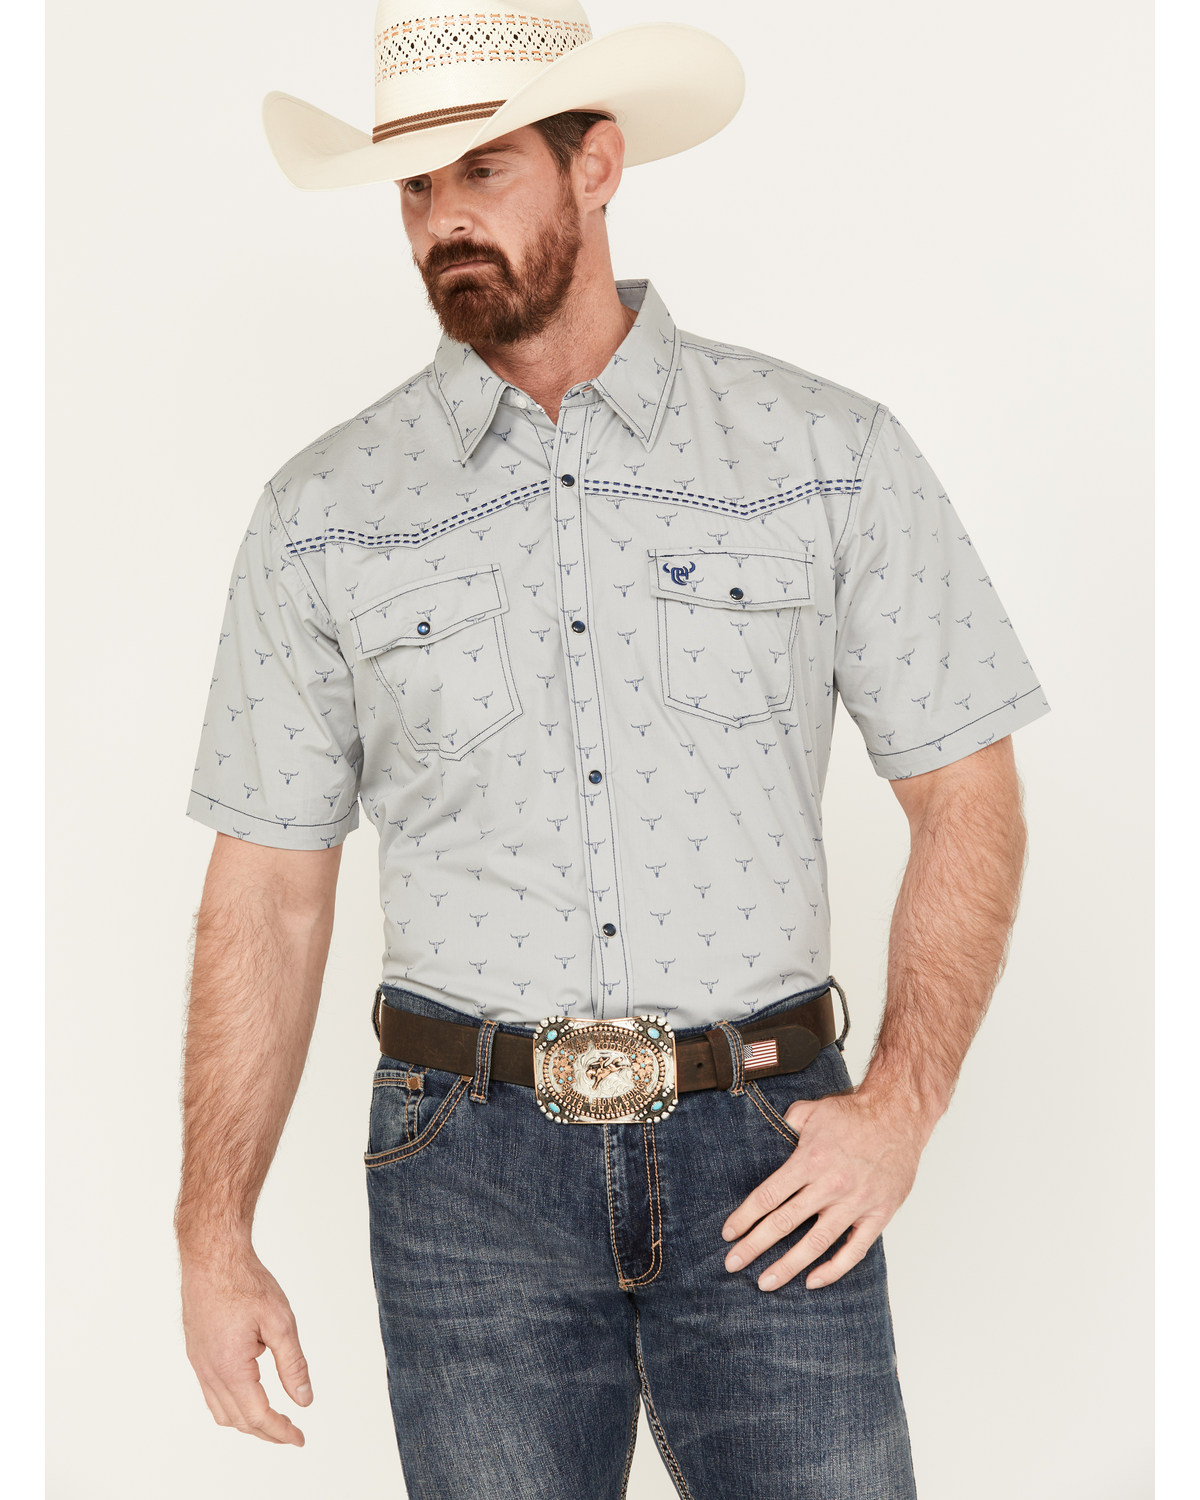 Cowboy Hardware Men's All Over Skull Short Sleeve Western Snap Shirt